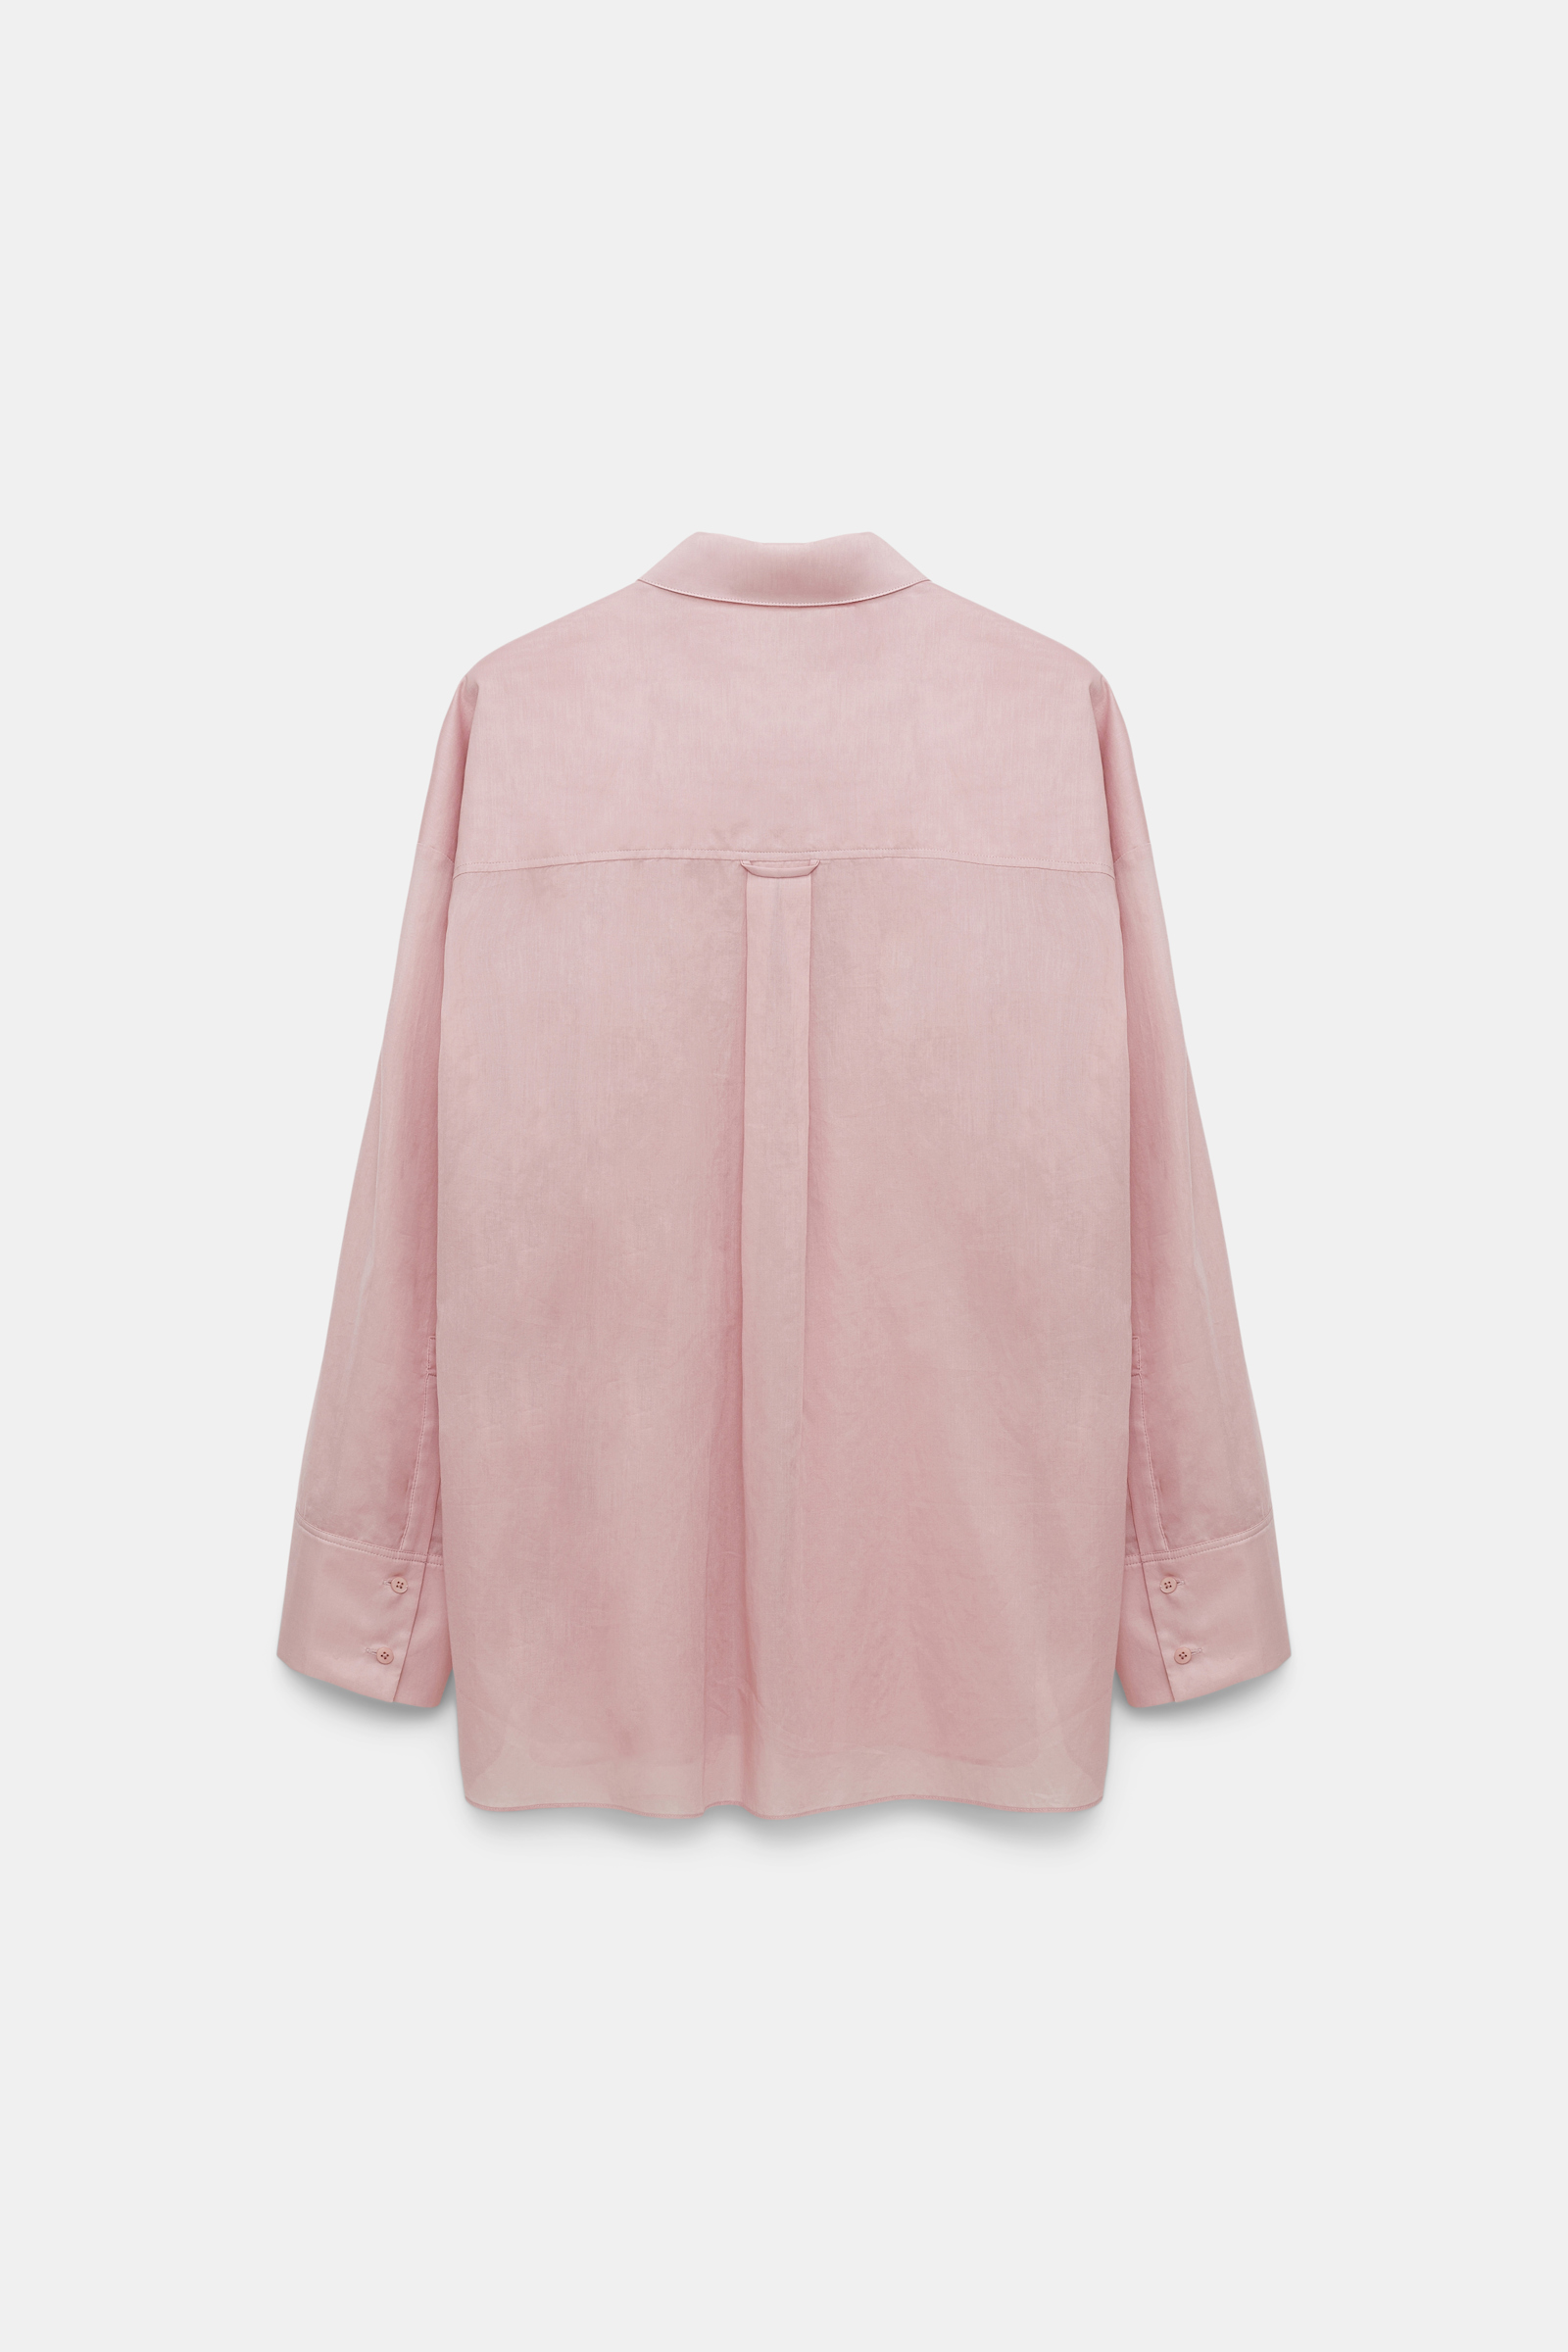 Dorothee Schumacher Oversized Bluse aus Cotton Voile light rose